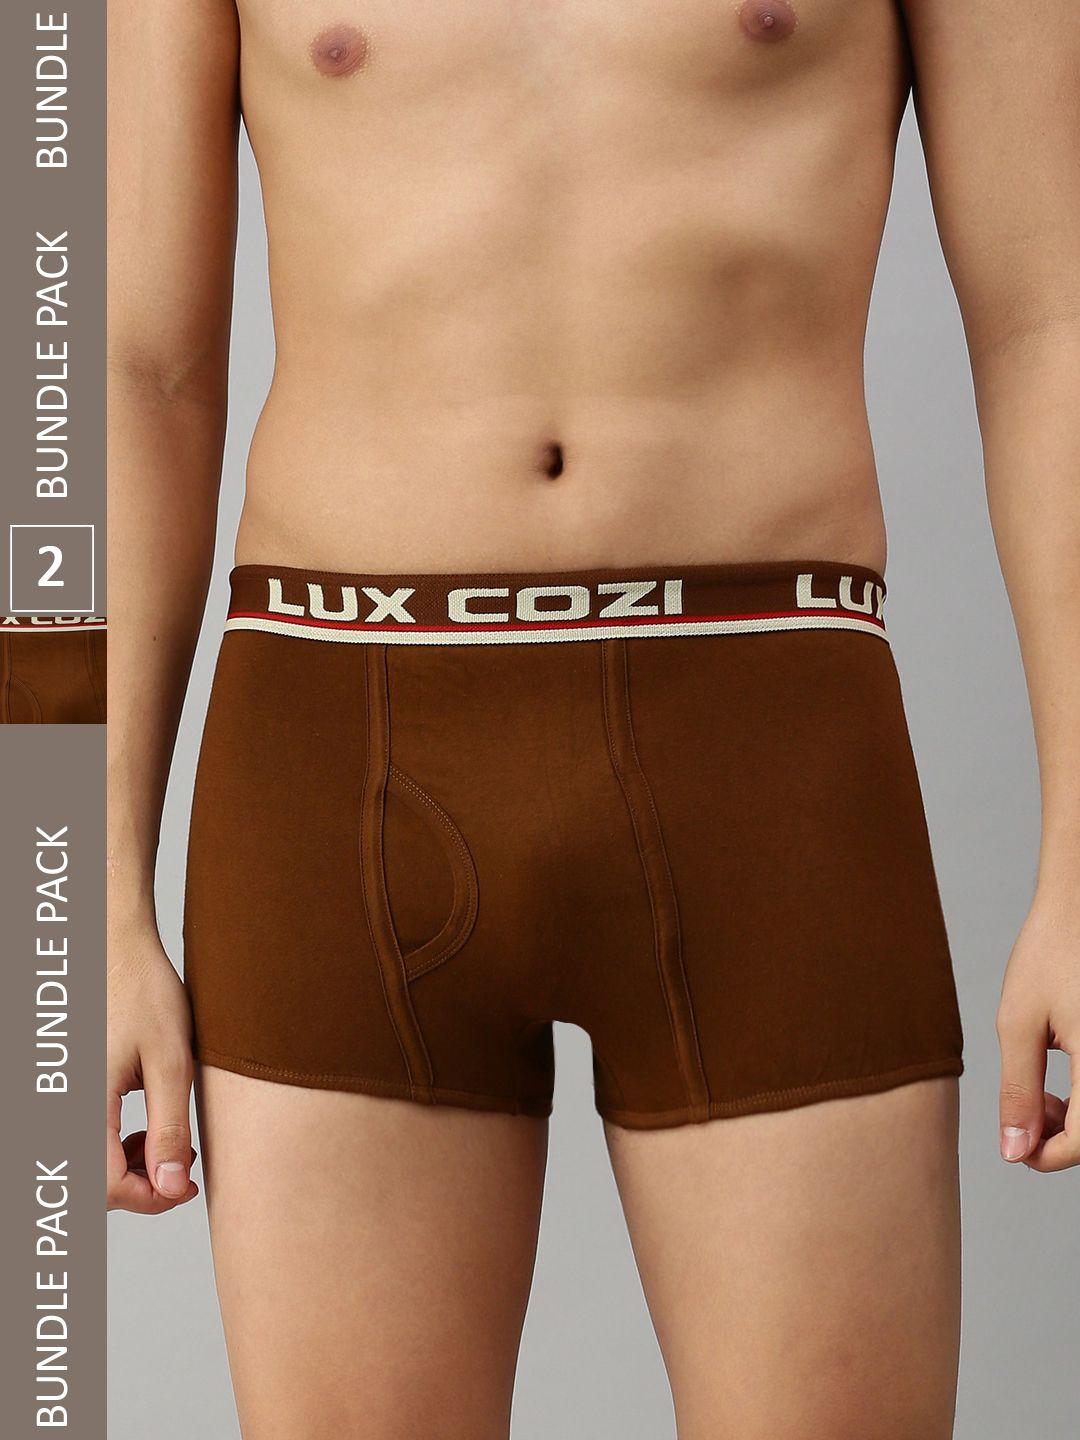 lux cozi men pack of 2 plus size trunk cozi_bigshot_slp_mst_2pc